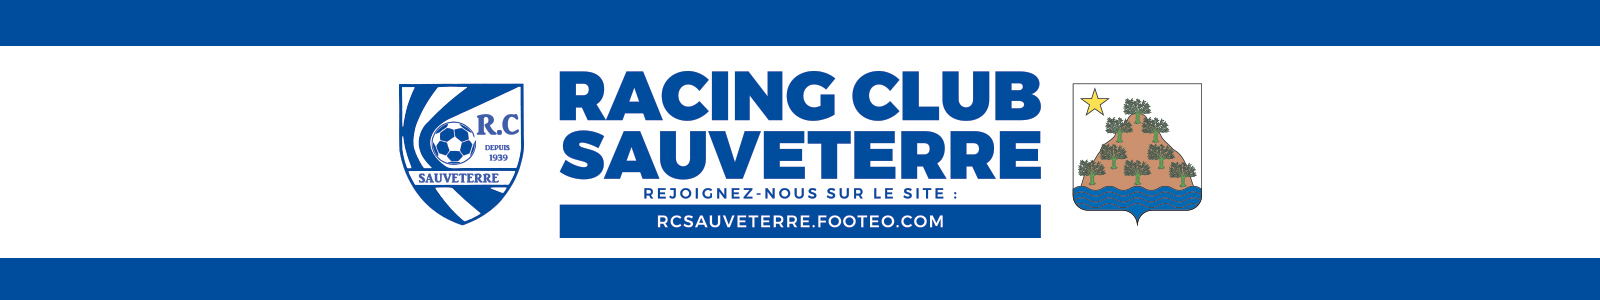 RACING CLUB SAUVETERRE : site officiel du club de foot de Sauveterre - footeo